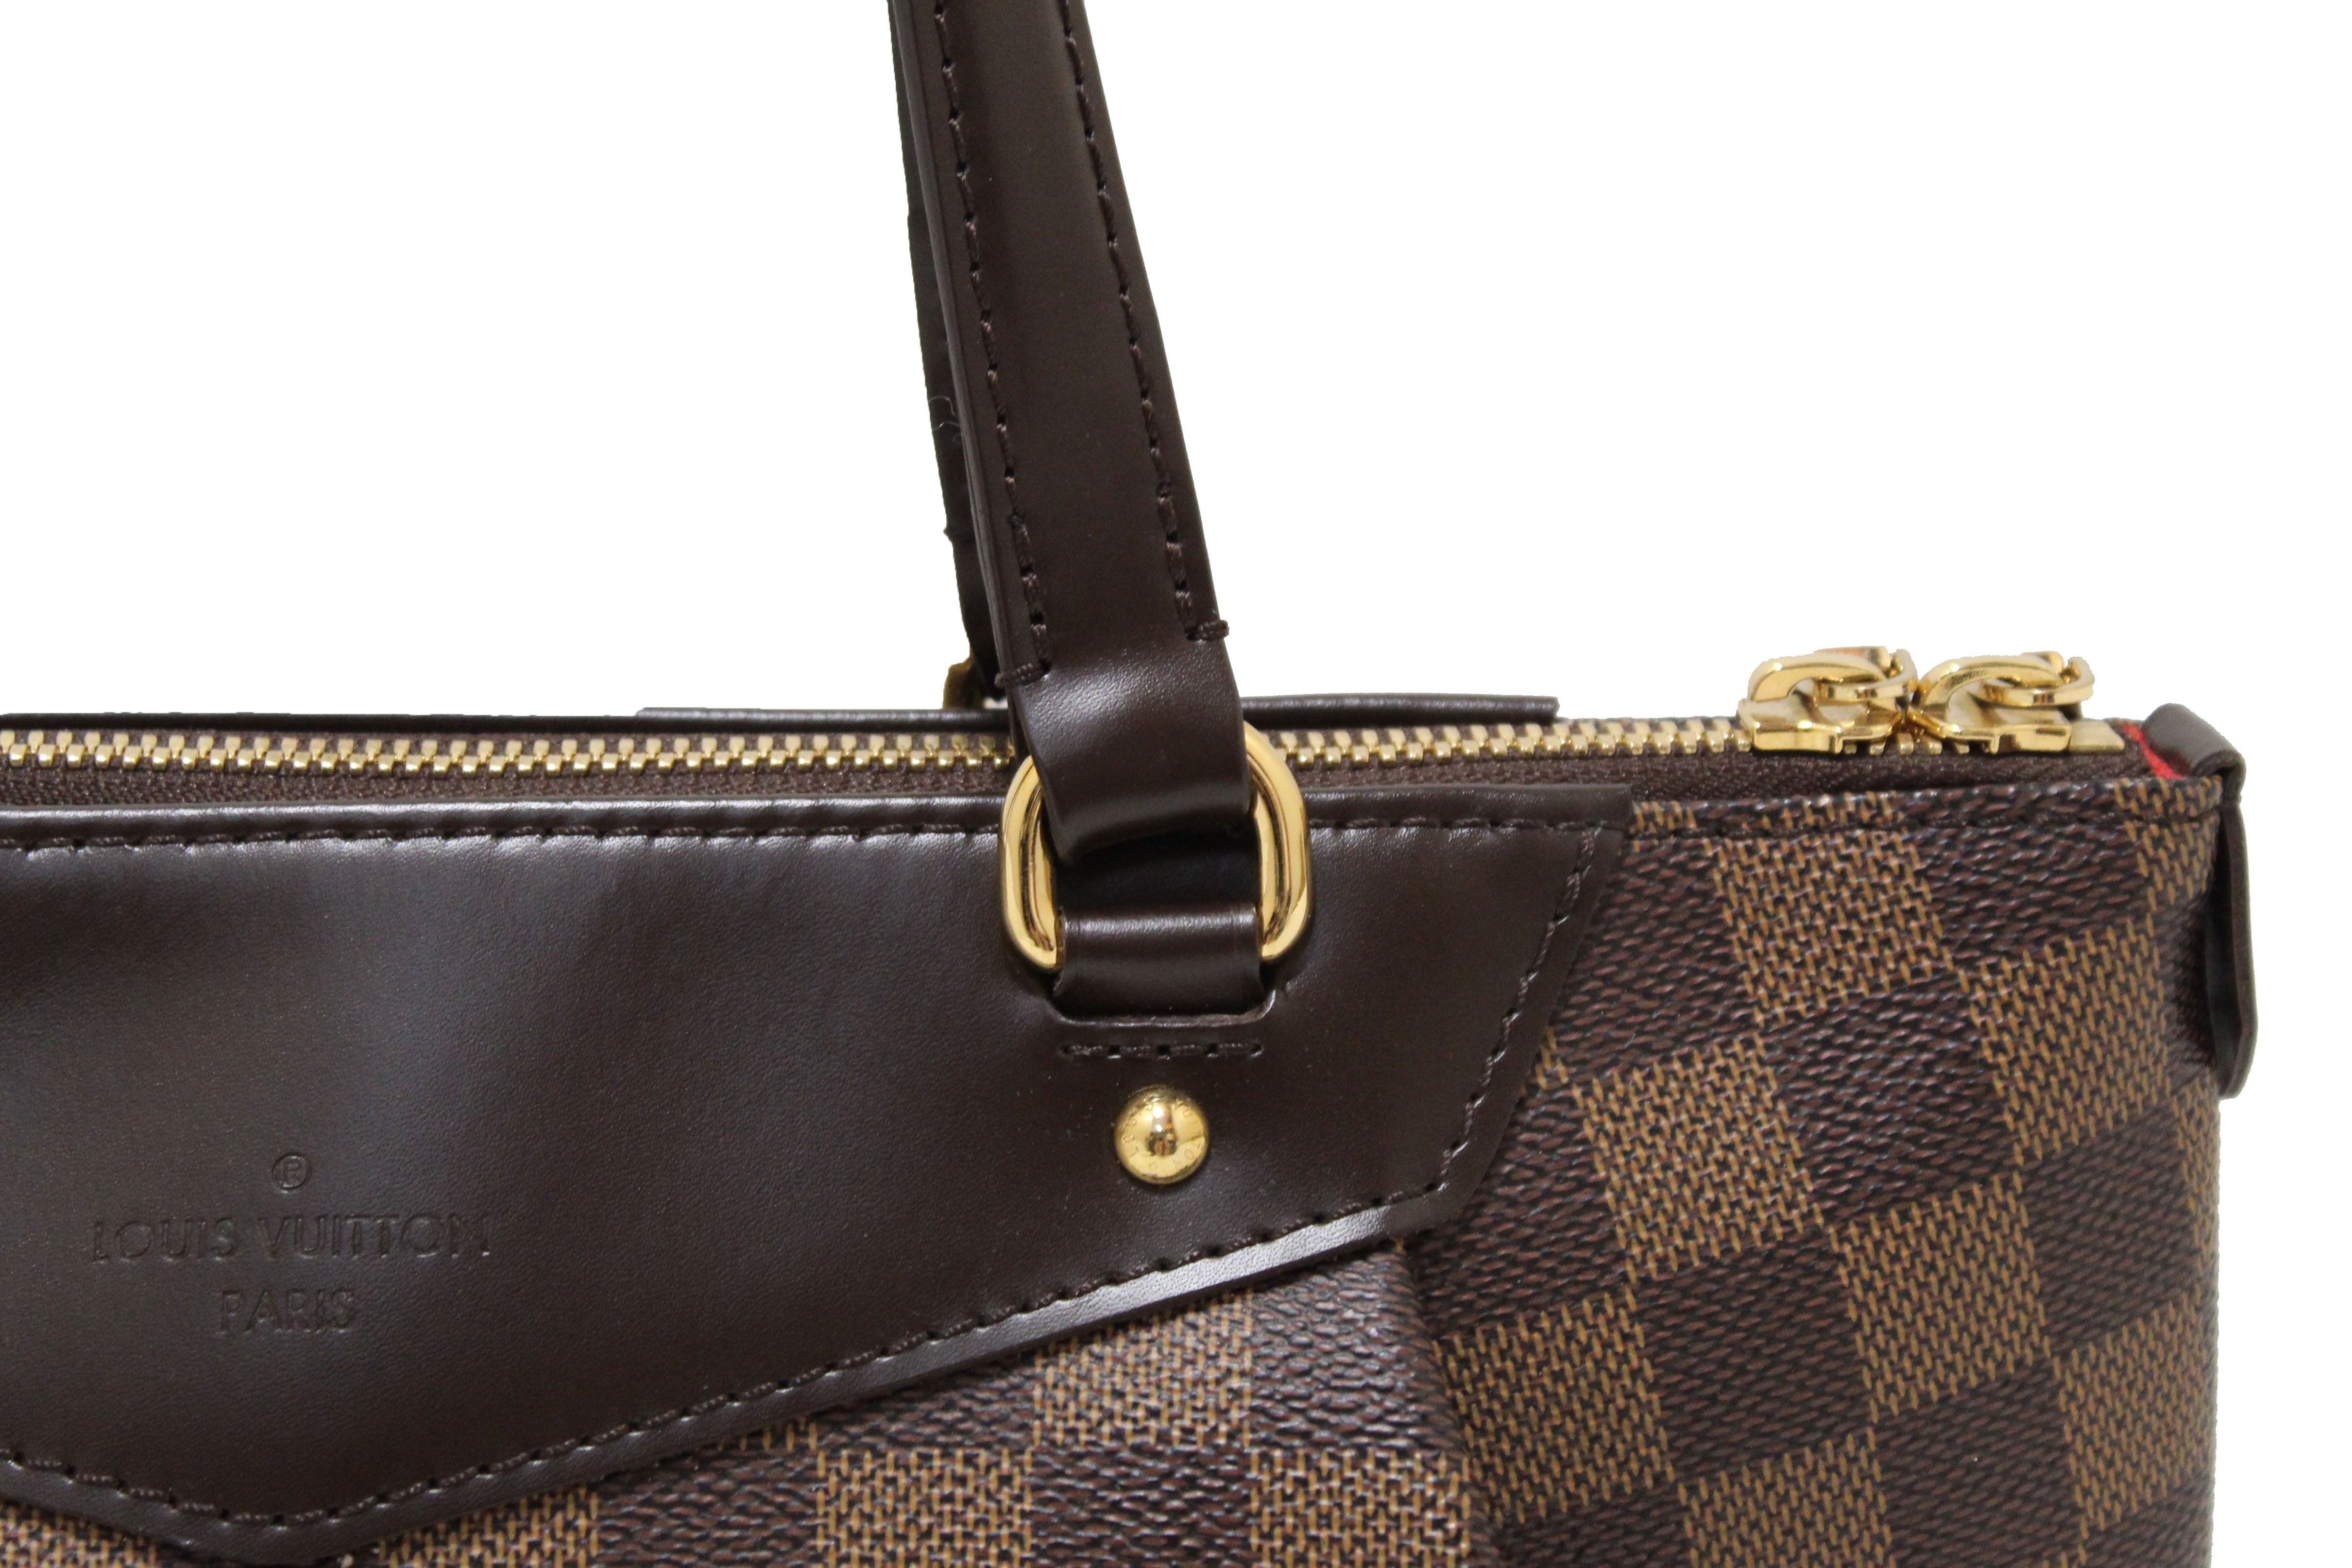 Louis Vuitton Westminster PM Damier Ebene Shoulder Handbag TT2948 